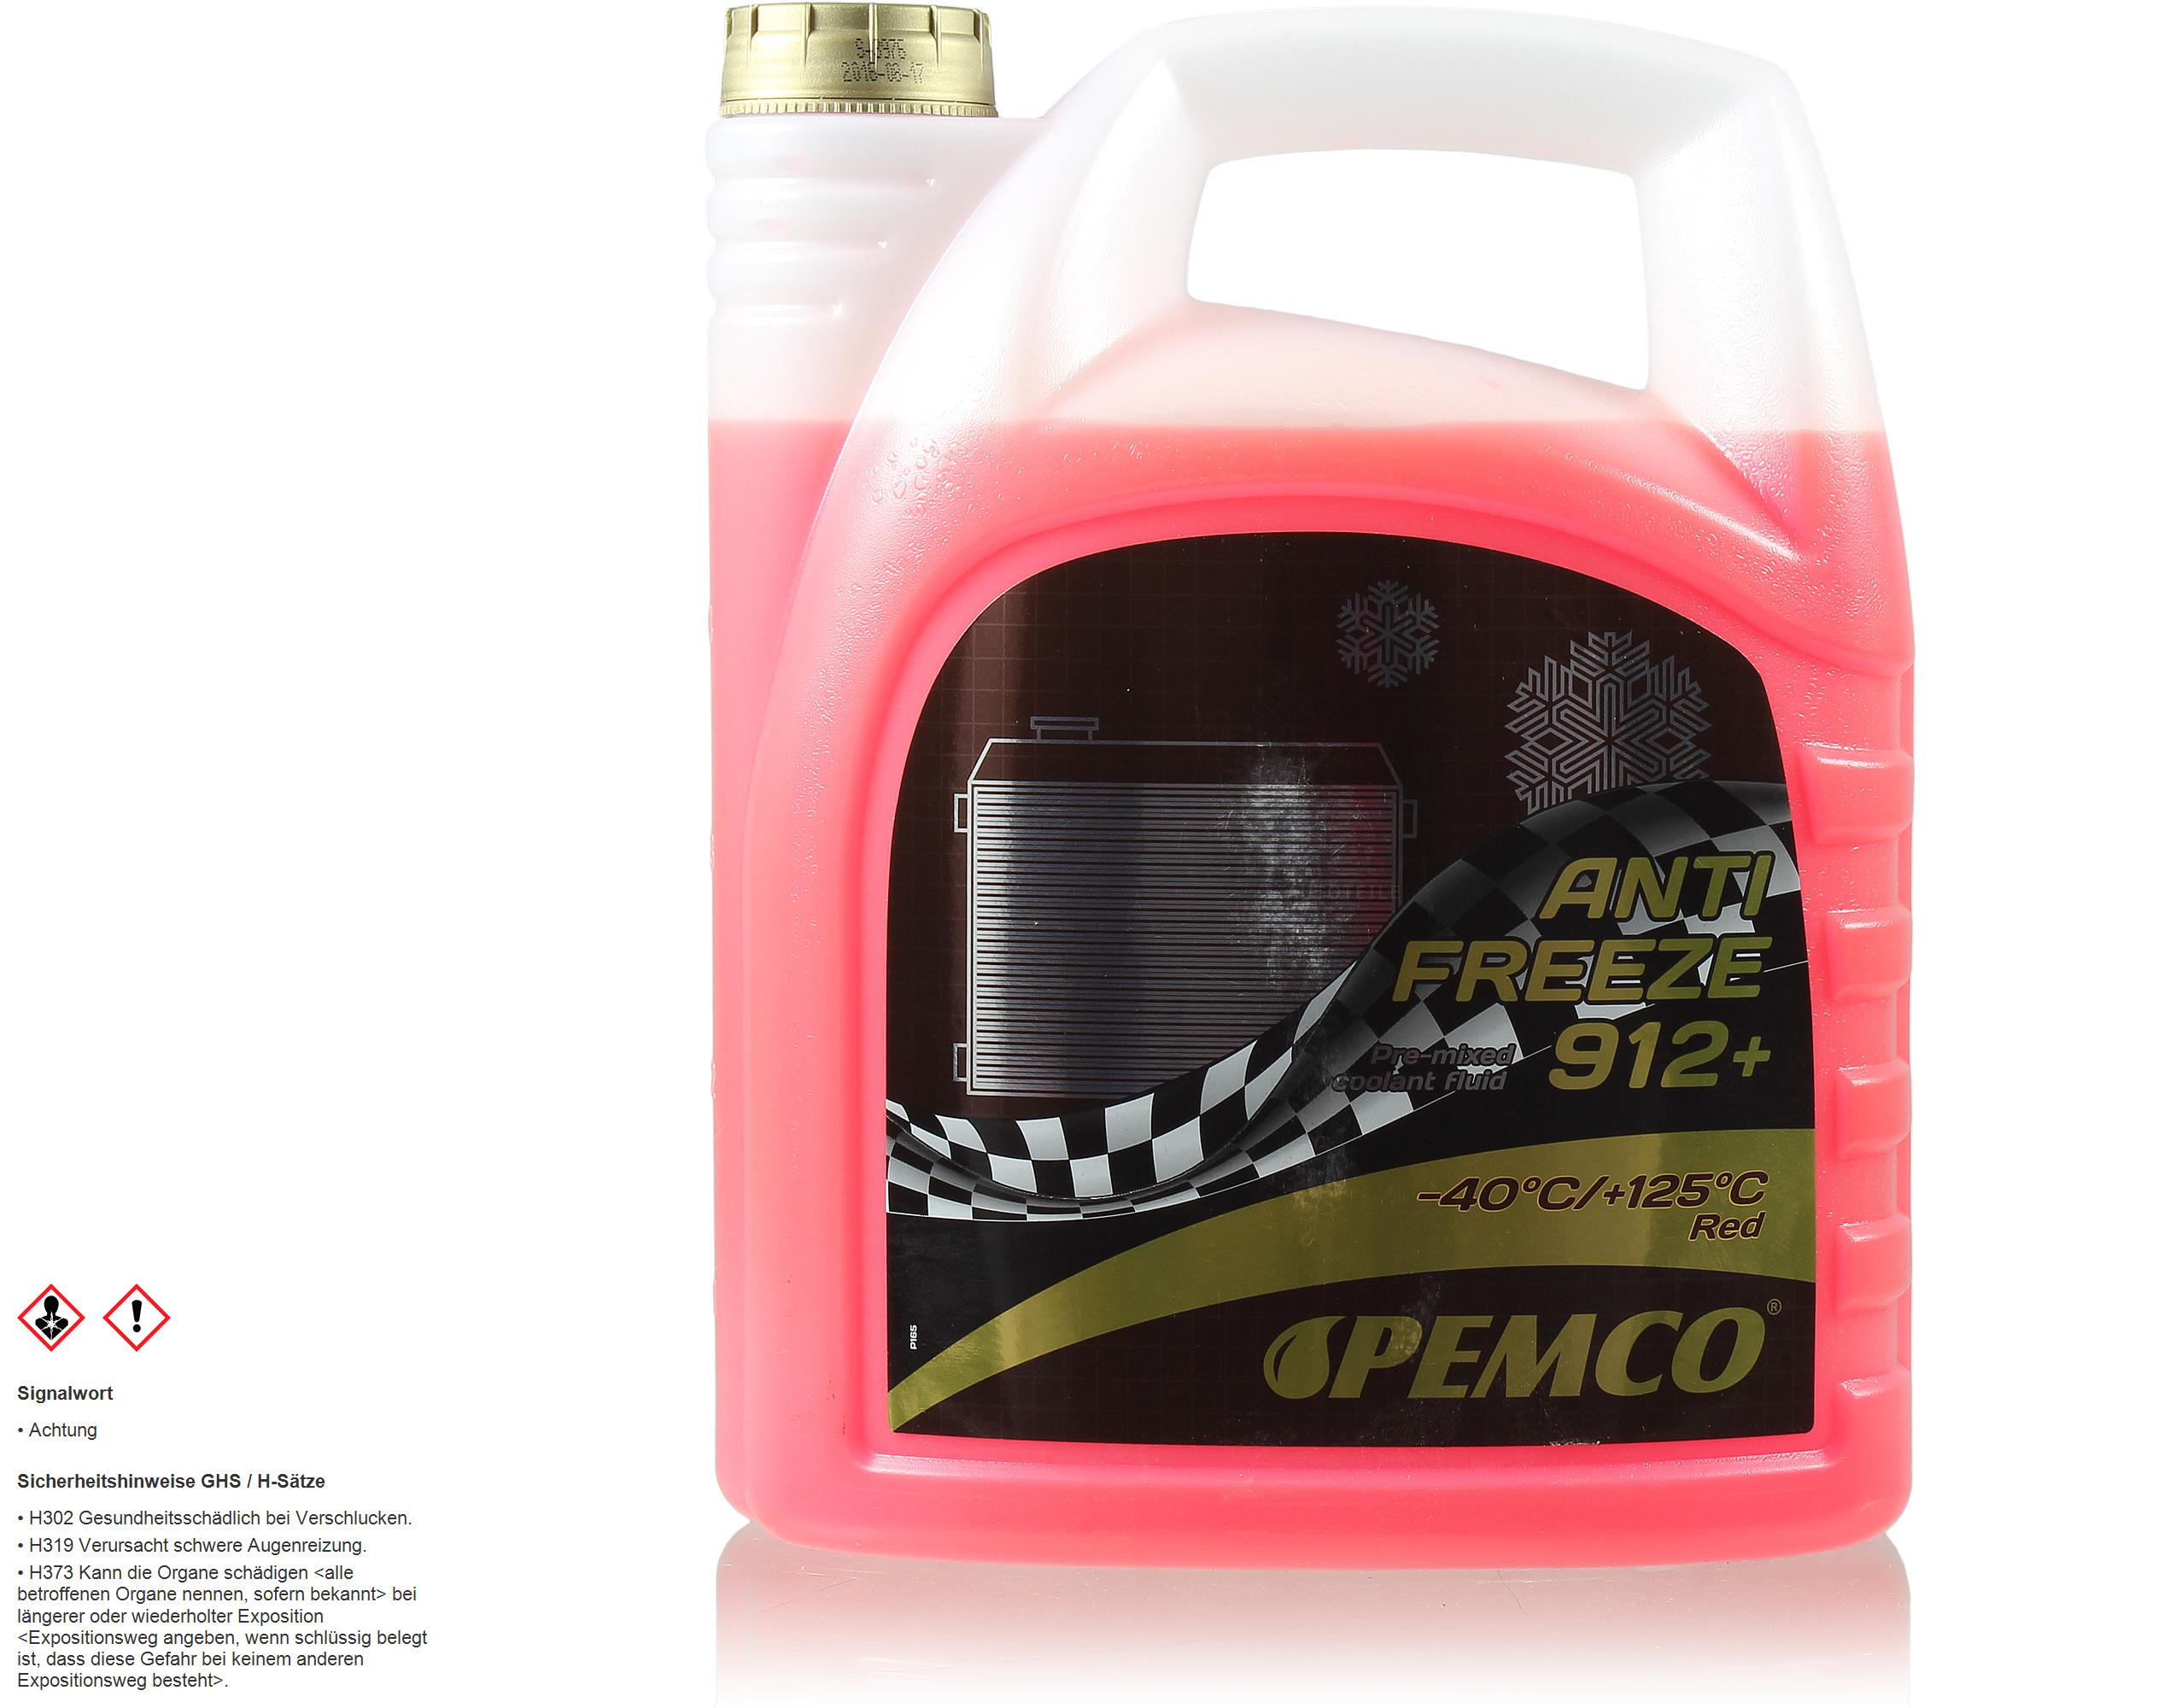 Pemco 1x5 Liter Kühlerfrostschutz Antifreeze 912 rot -40°C KÜHLMITTEL G12